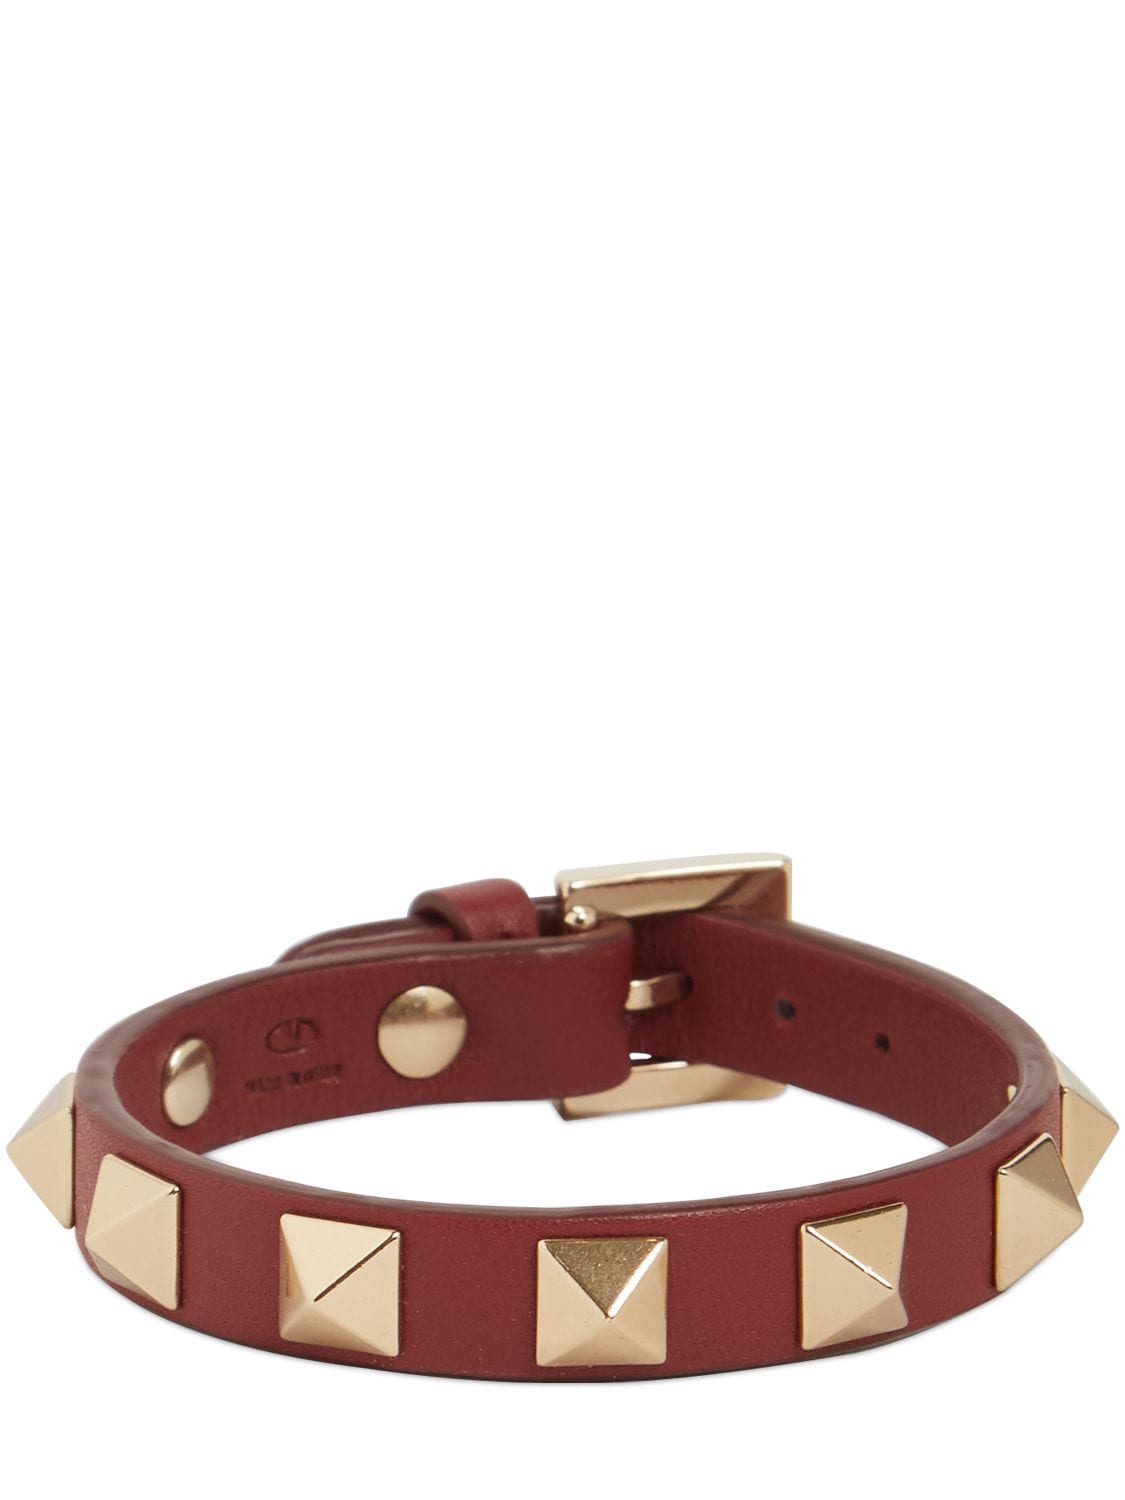 Valentino Garavani Rockstud Leather Belt Bracelet In Ruby